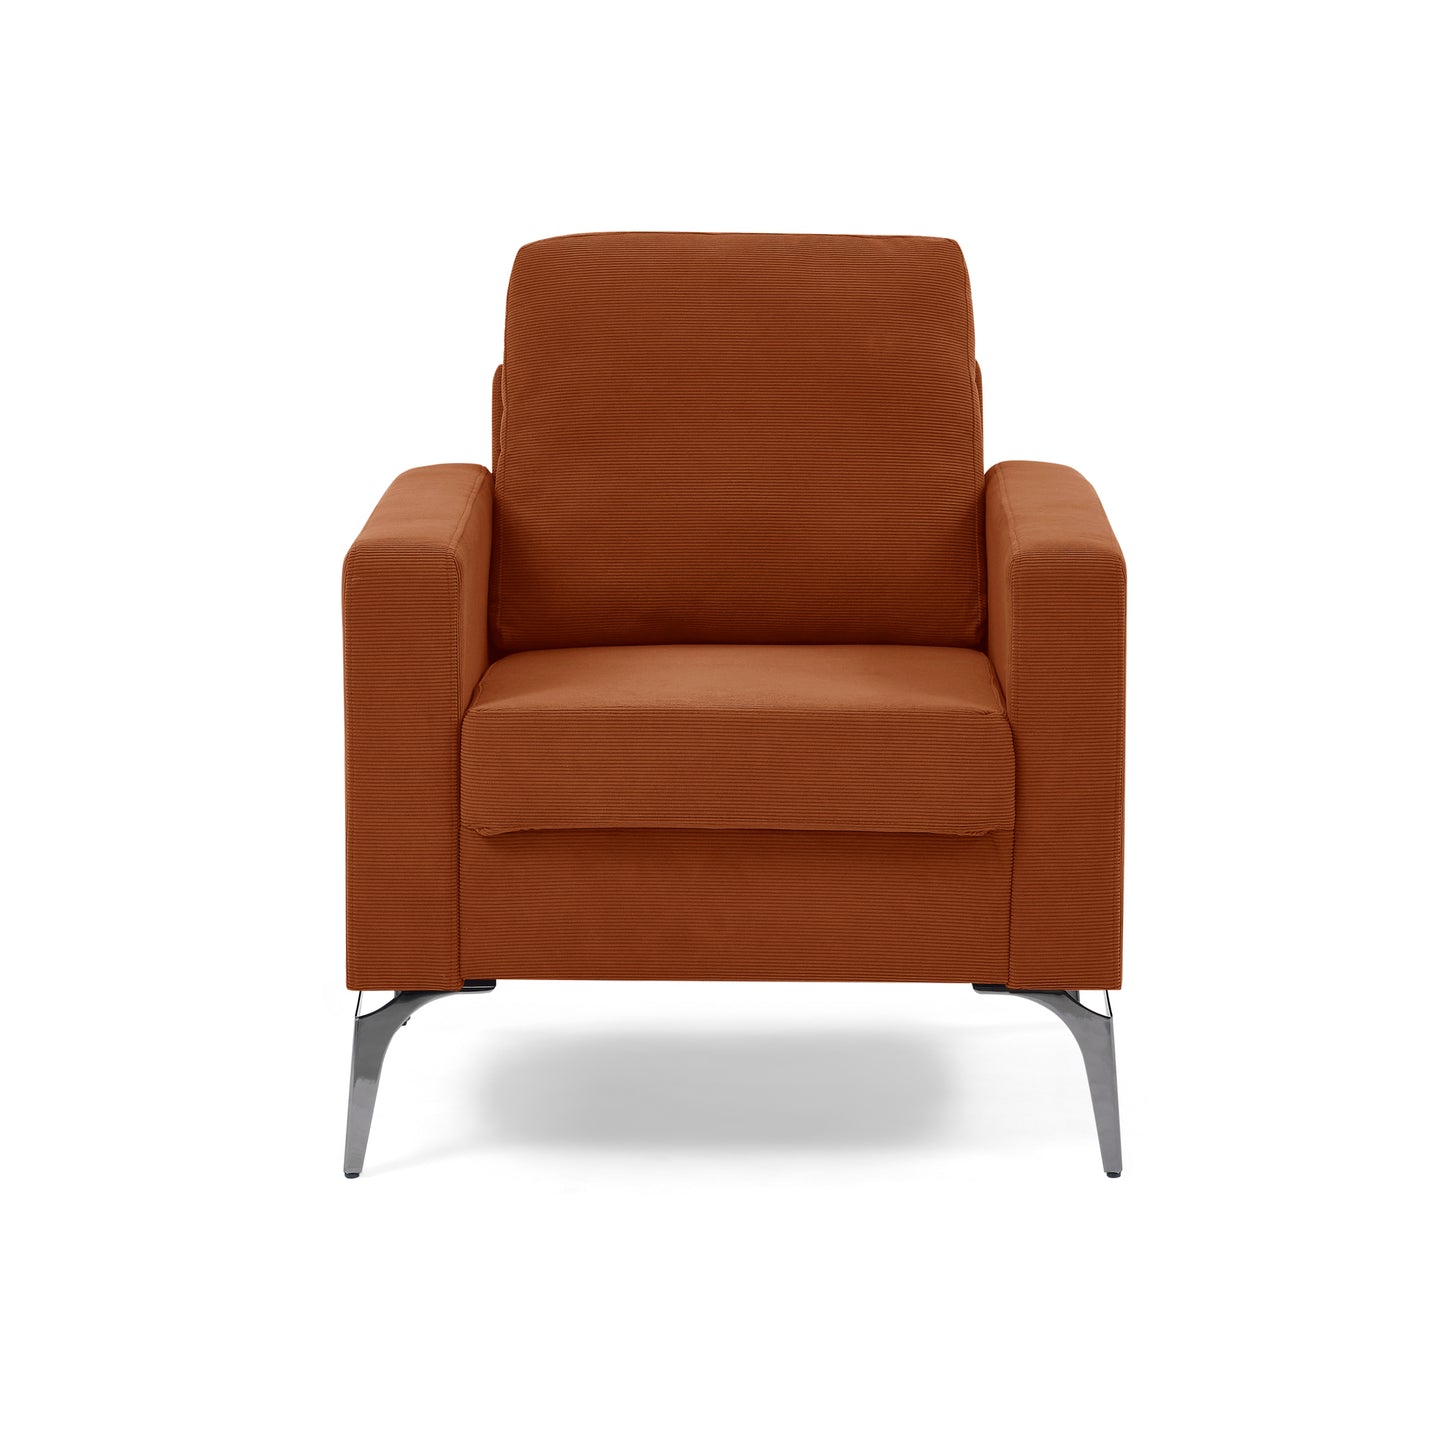 Pearson Square Corduroy Arm Chair Orange